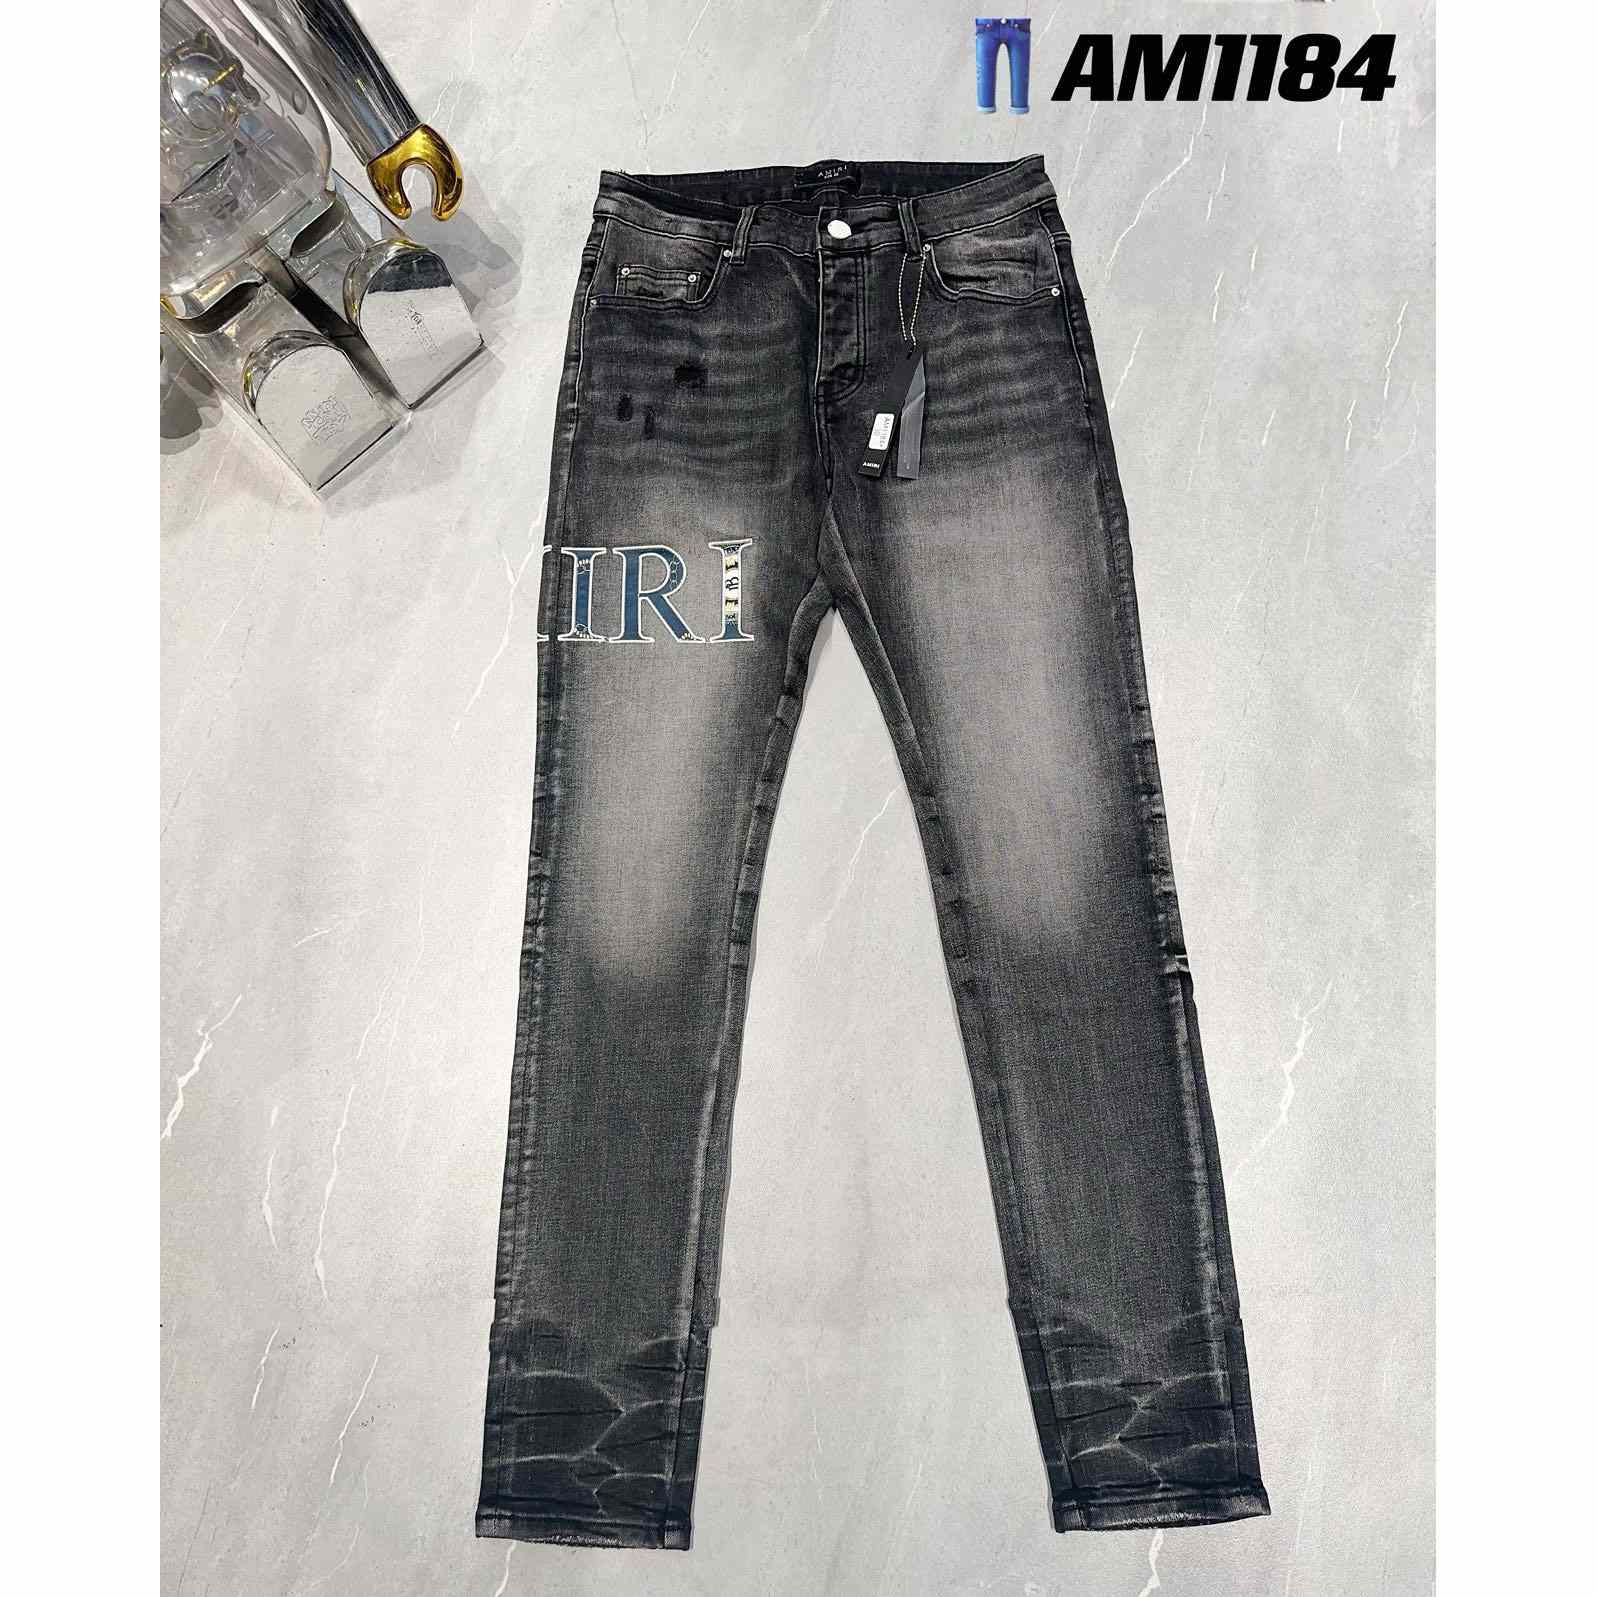 Amiri Jeans     AM1184 - everydesigner